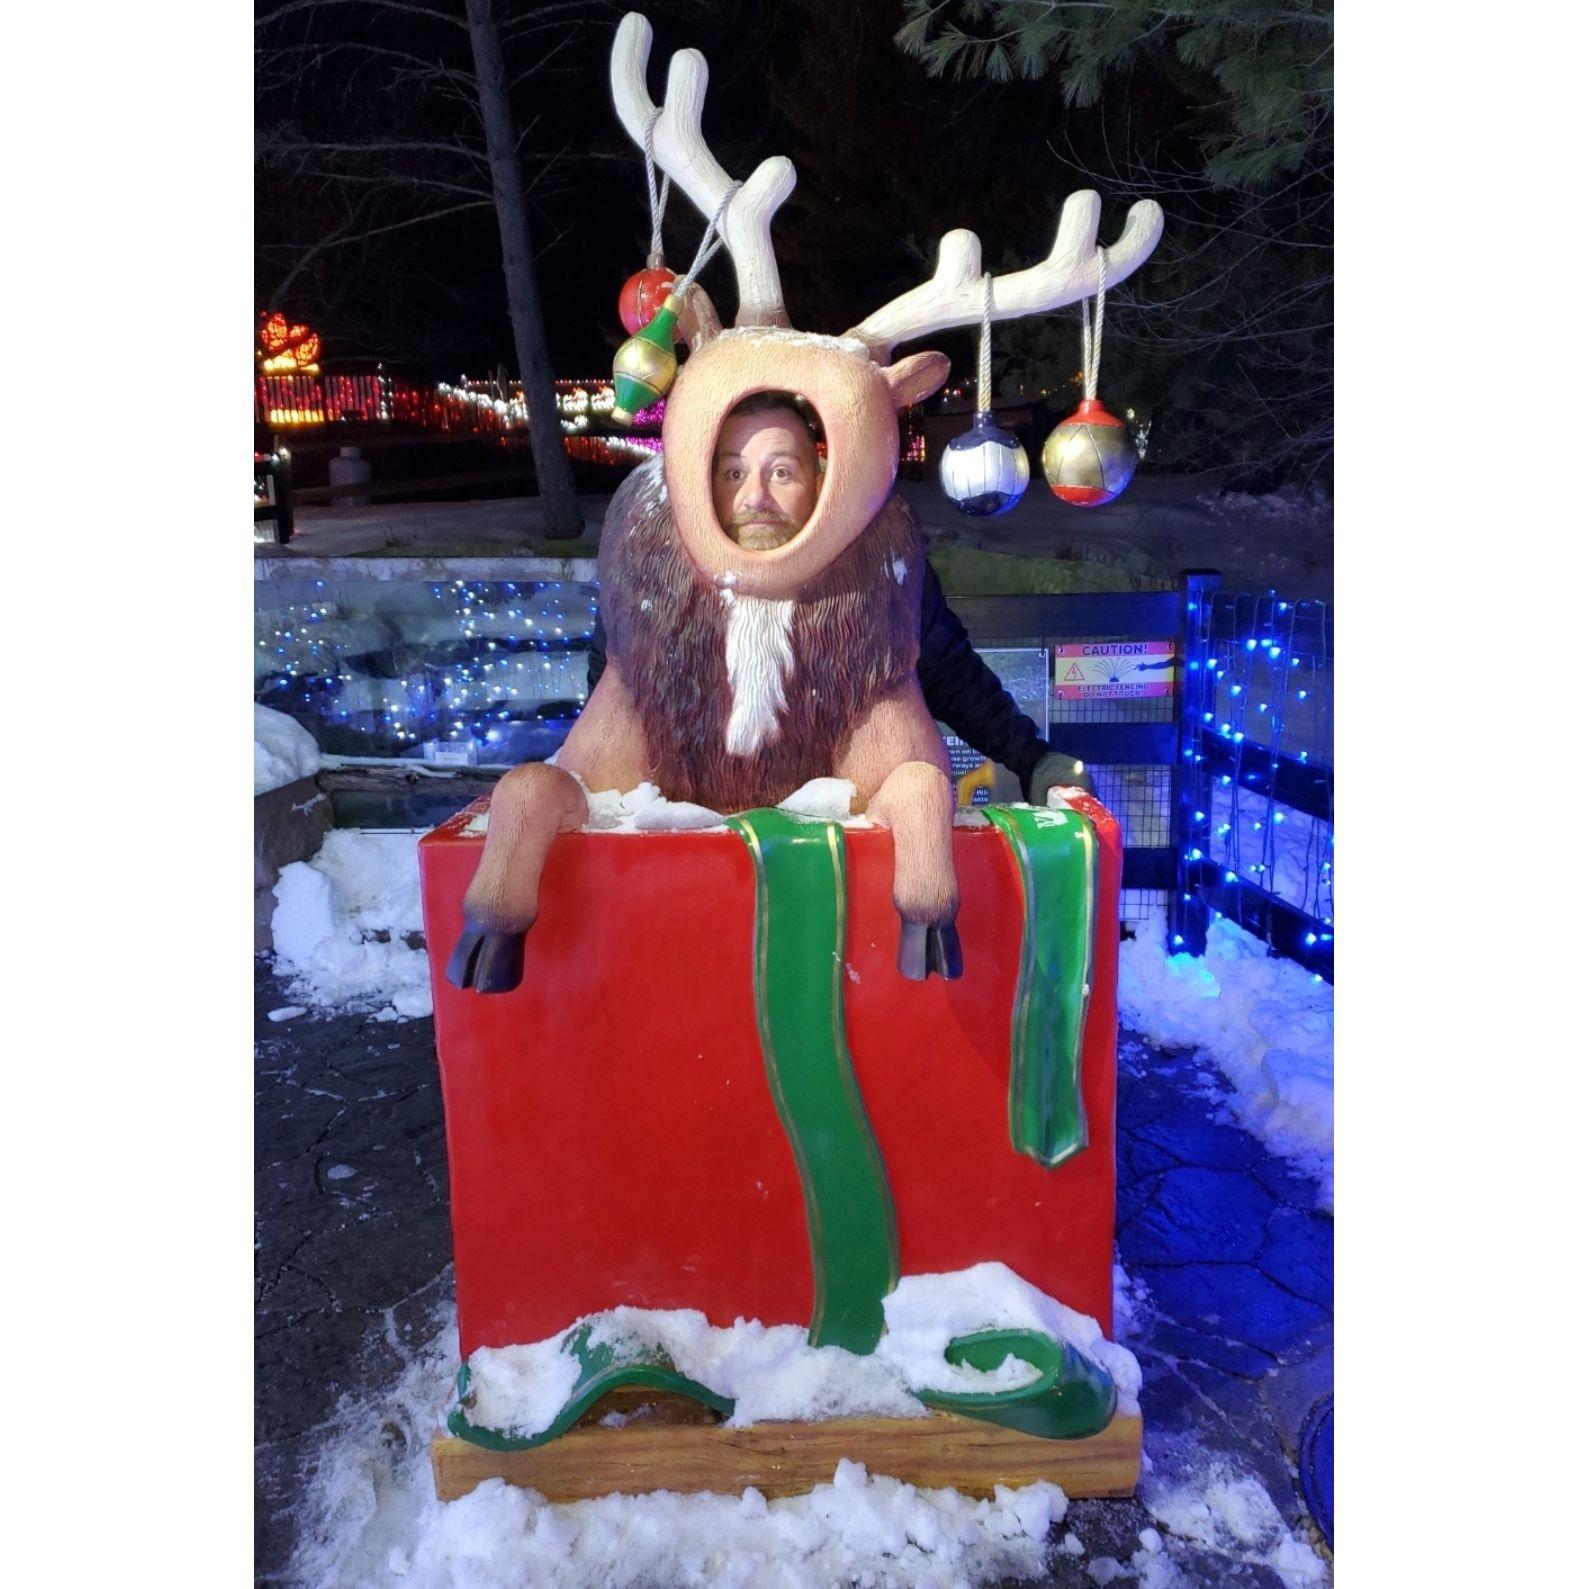 Thomas as a cheerful reindeer at Lehigh Valley Zoo Christmas